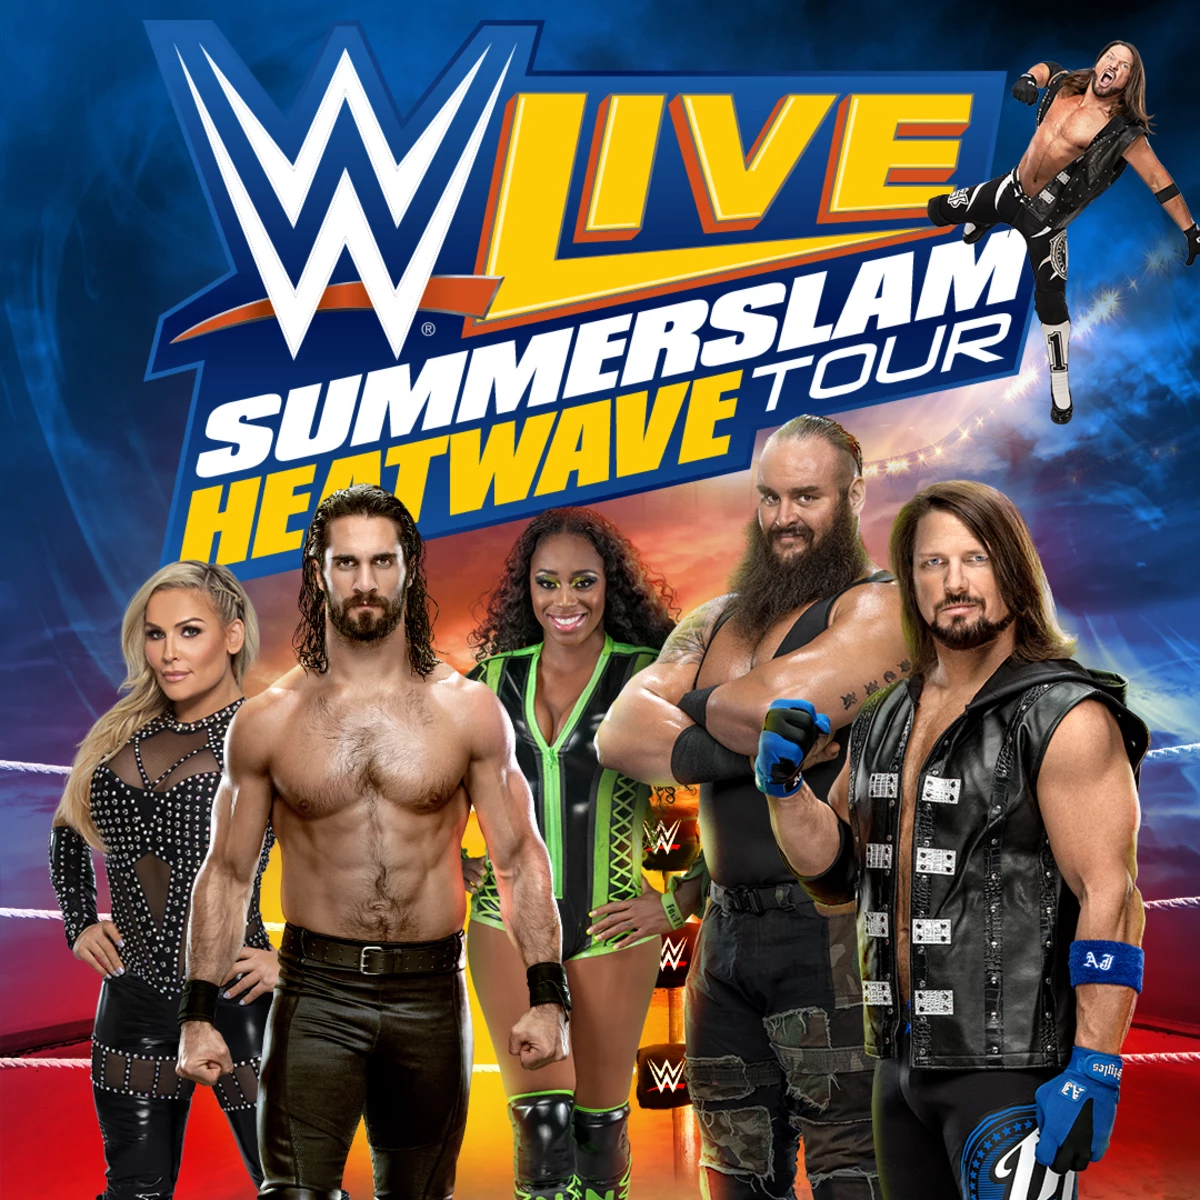 WWE Live Summerslam Heatwave PreSale Code